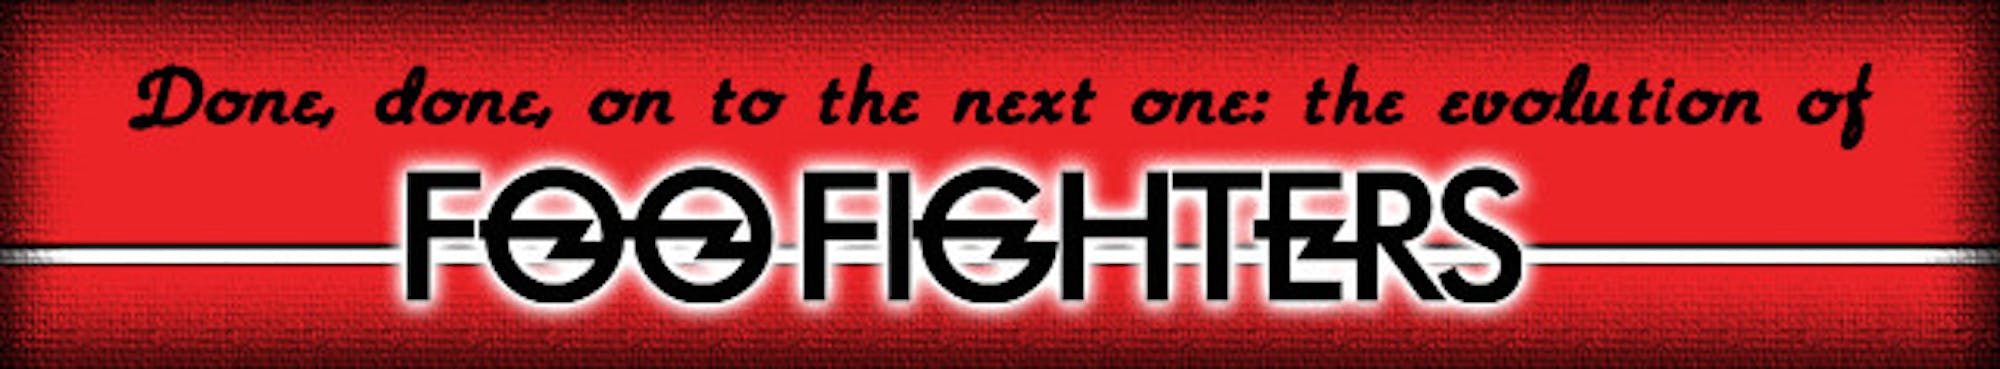 foo fighters web banner